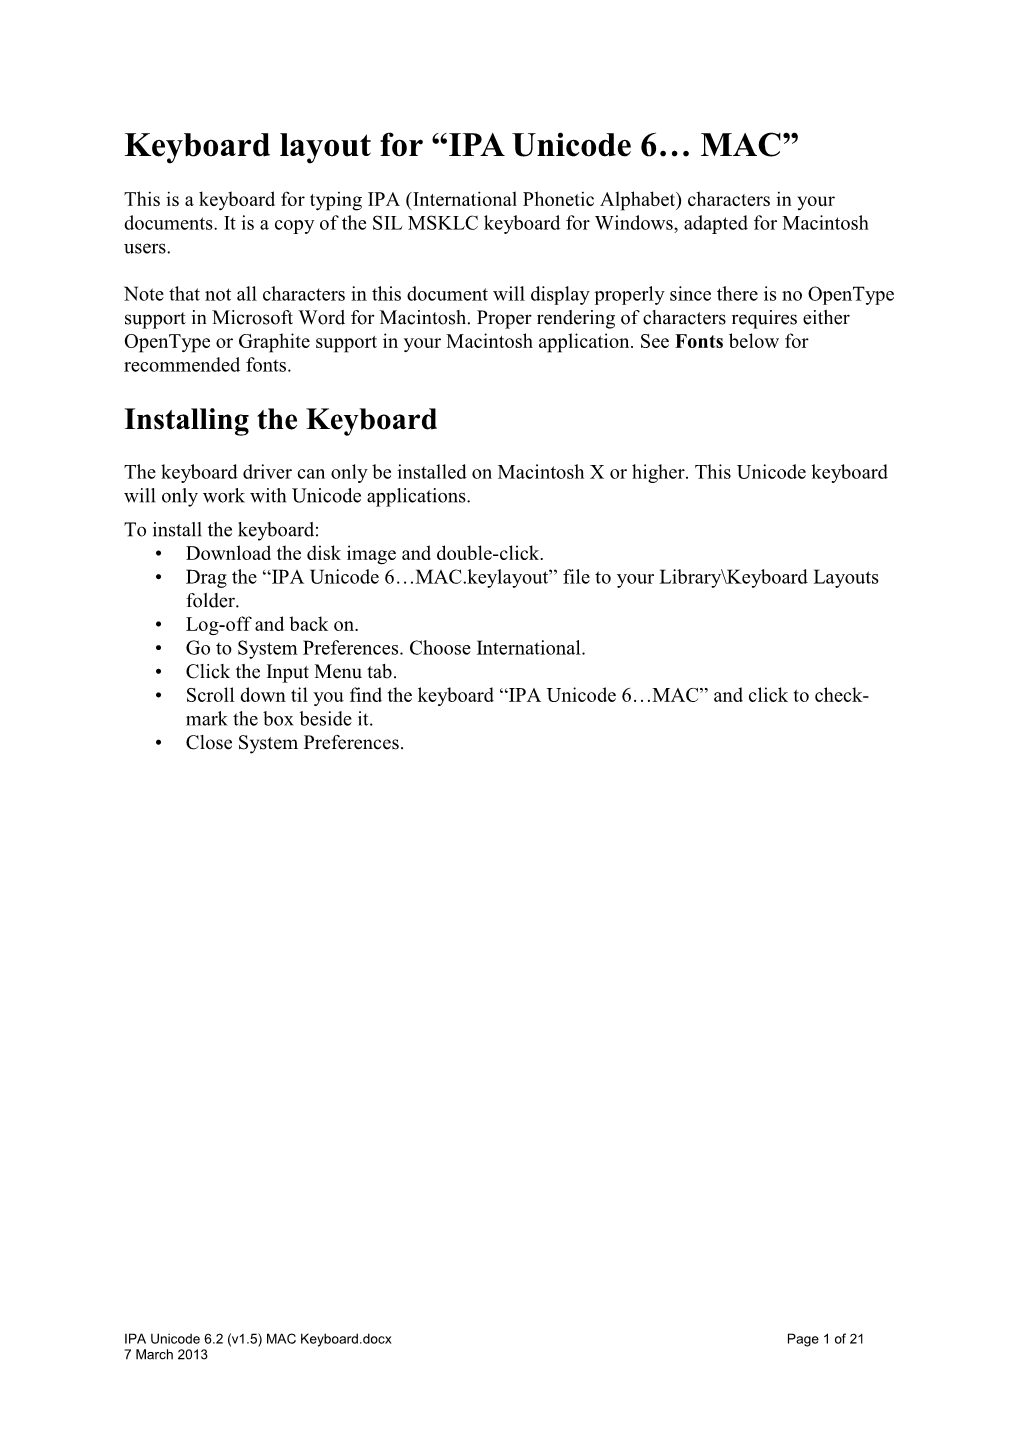 IPA Unicode 6.2 (V1.5) MAC Keyboard.Docx Page 1 of 21 7 March 2013 Uninstalling the Keyboard